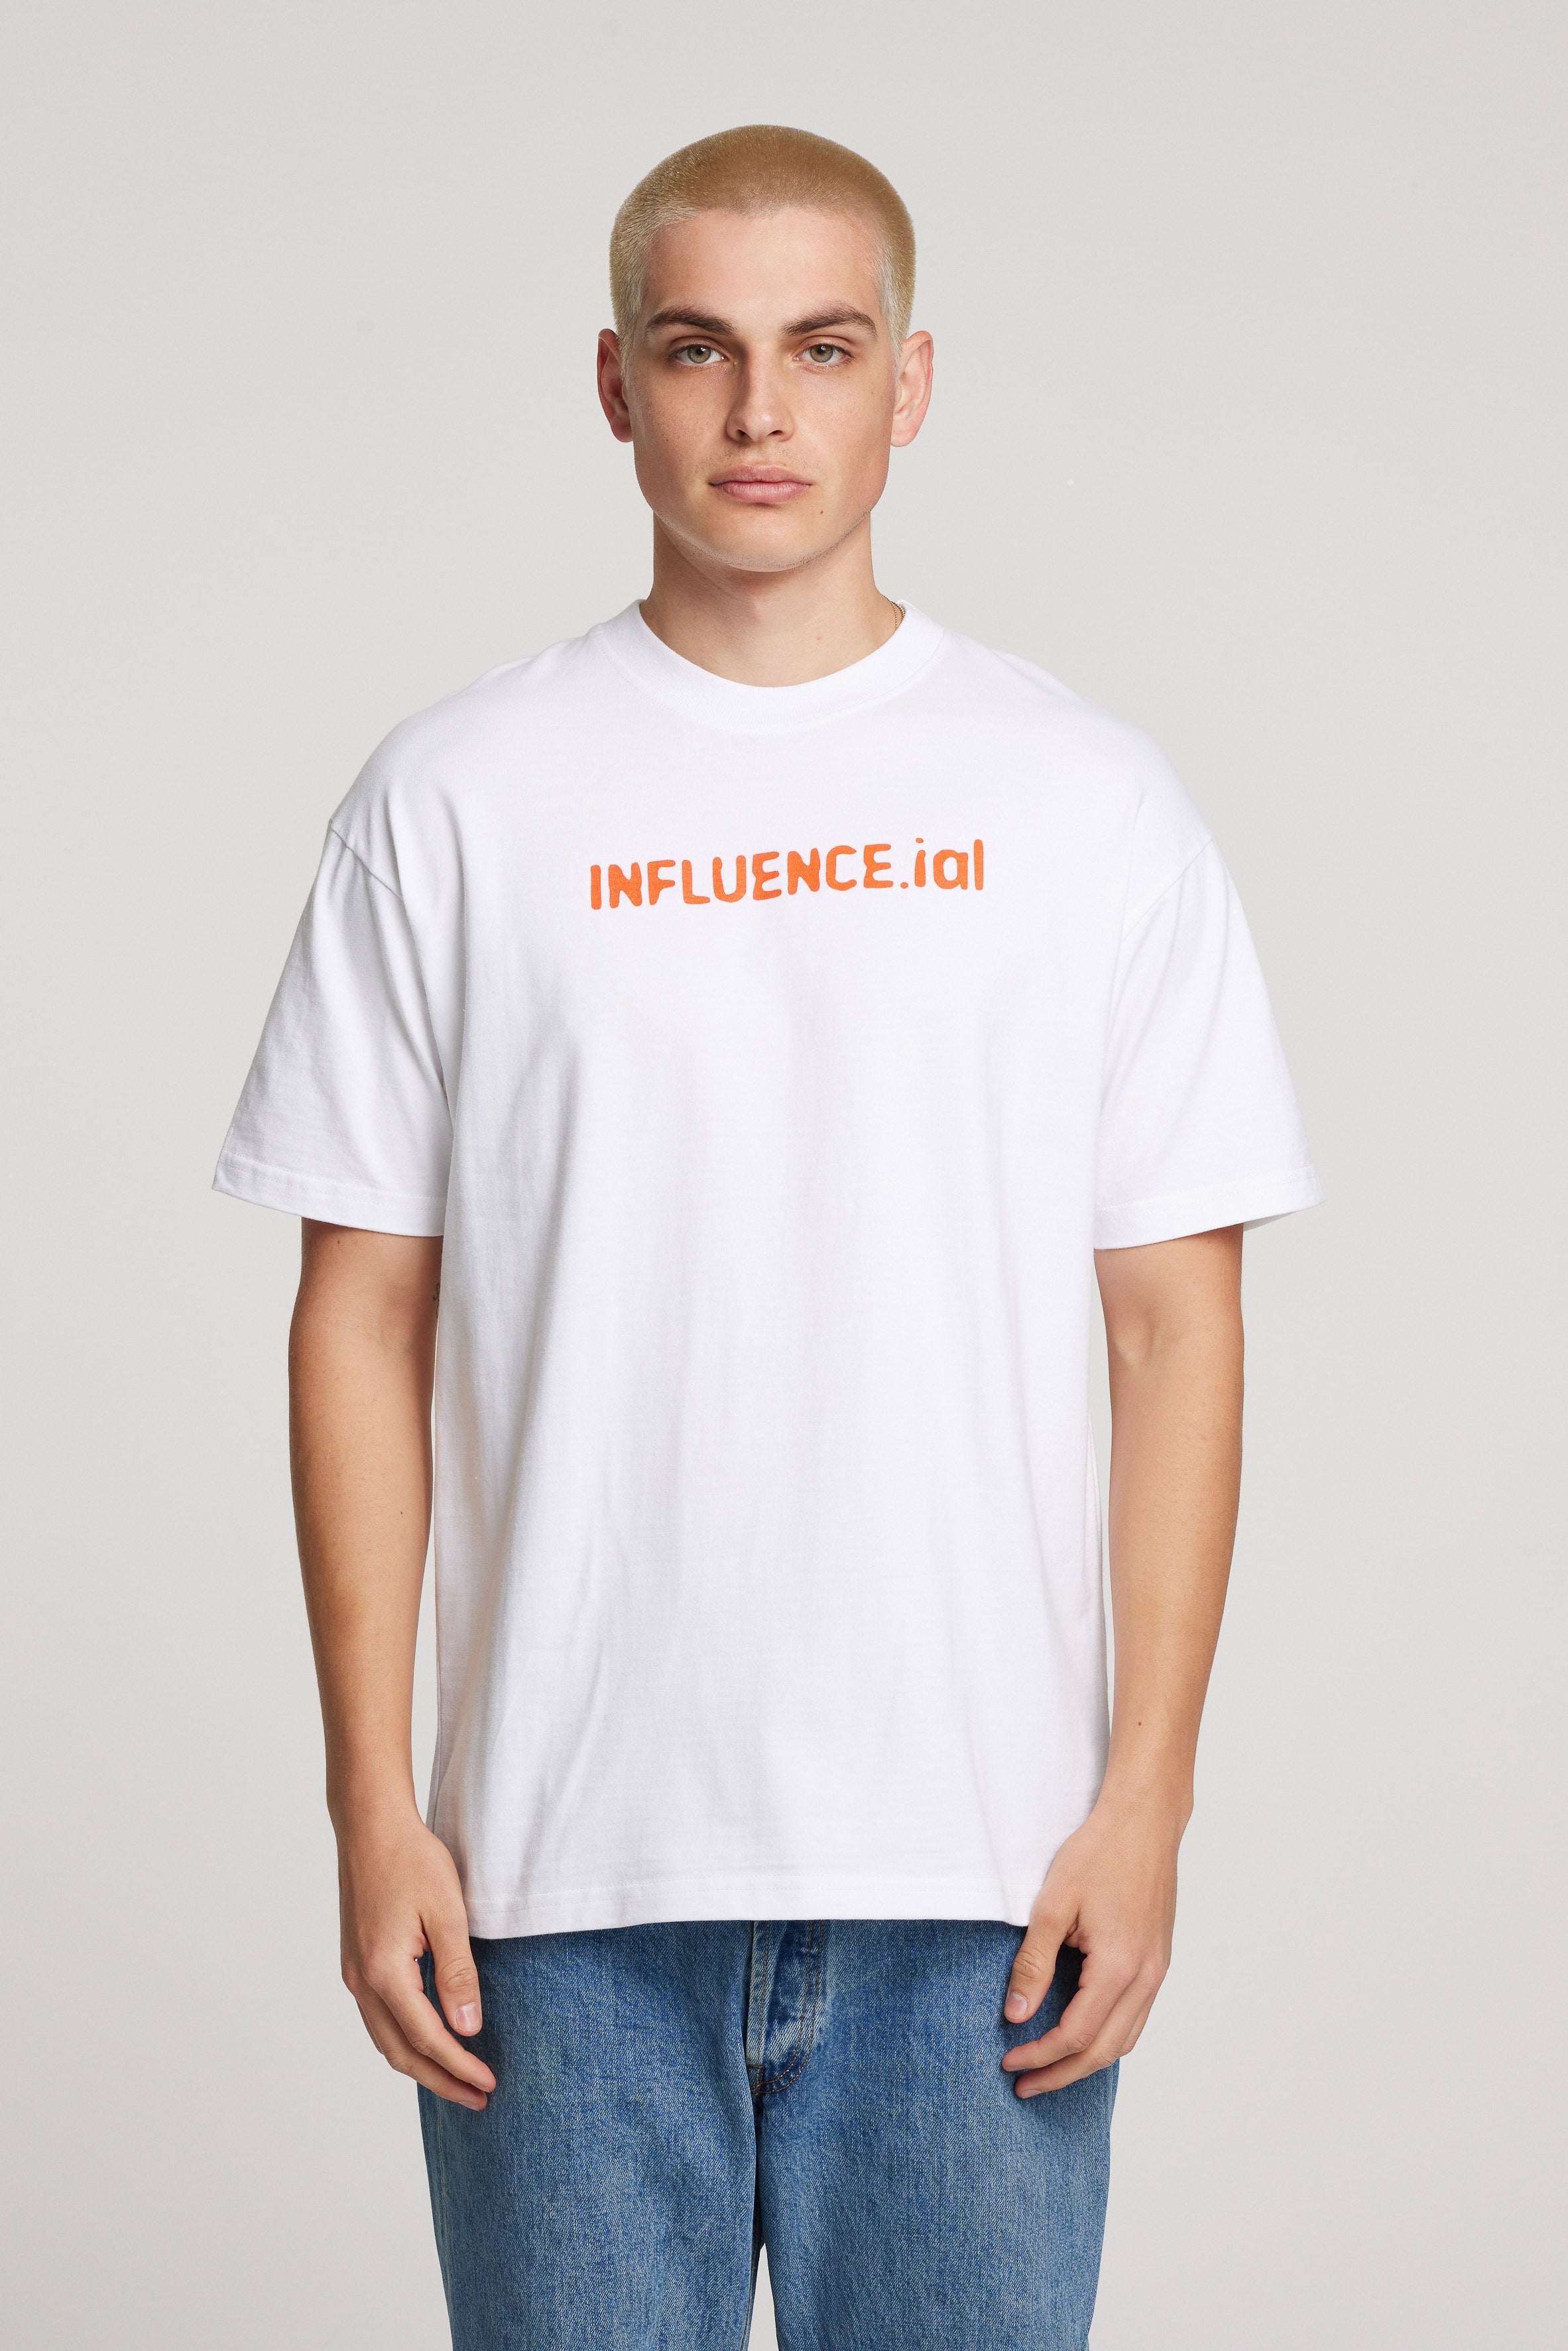 influence.ial